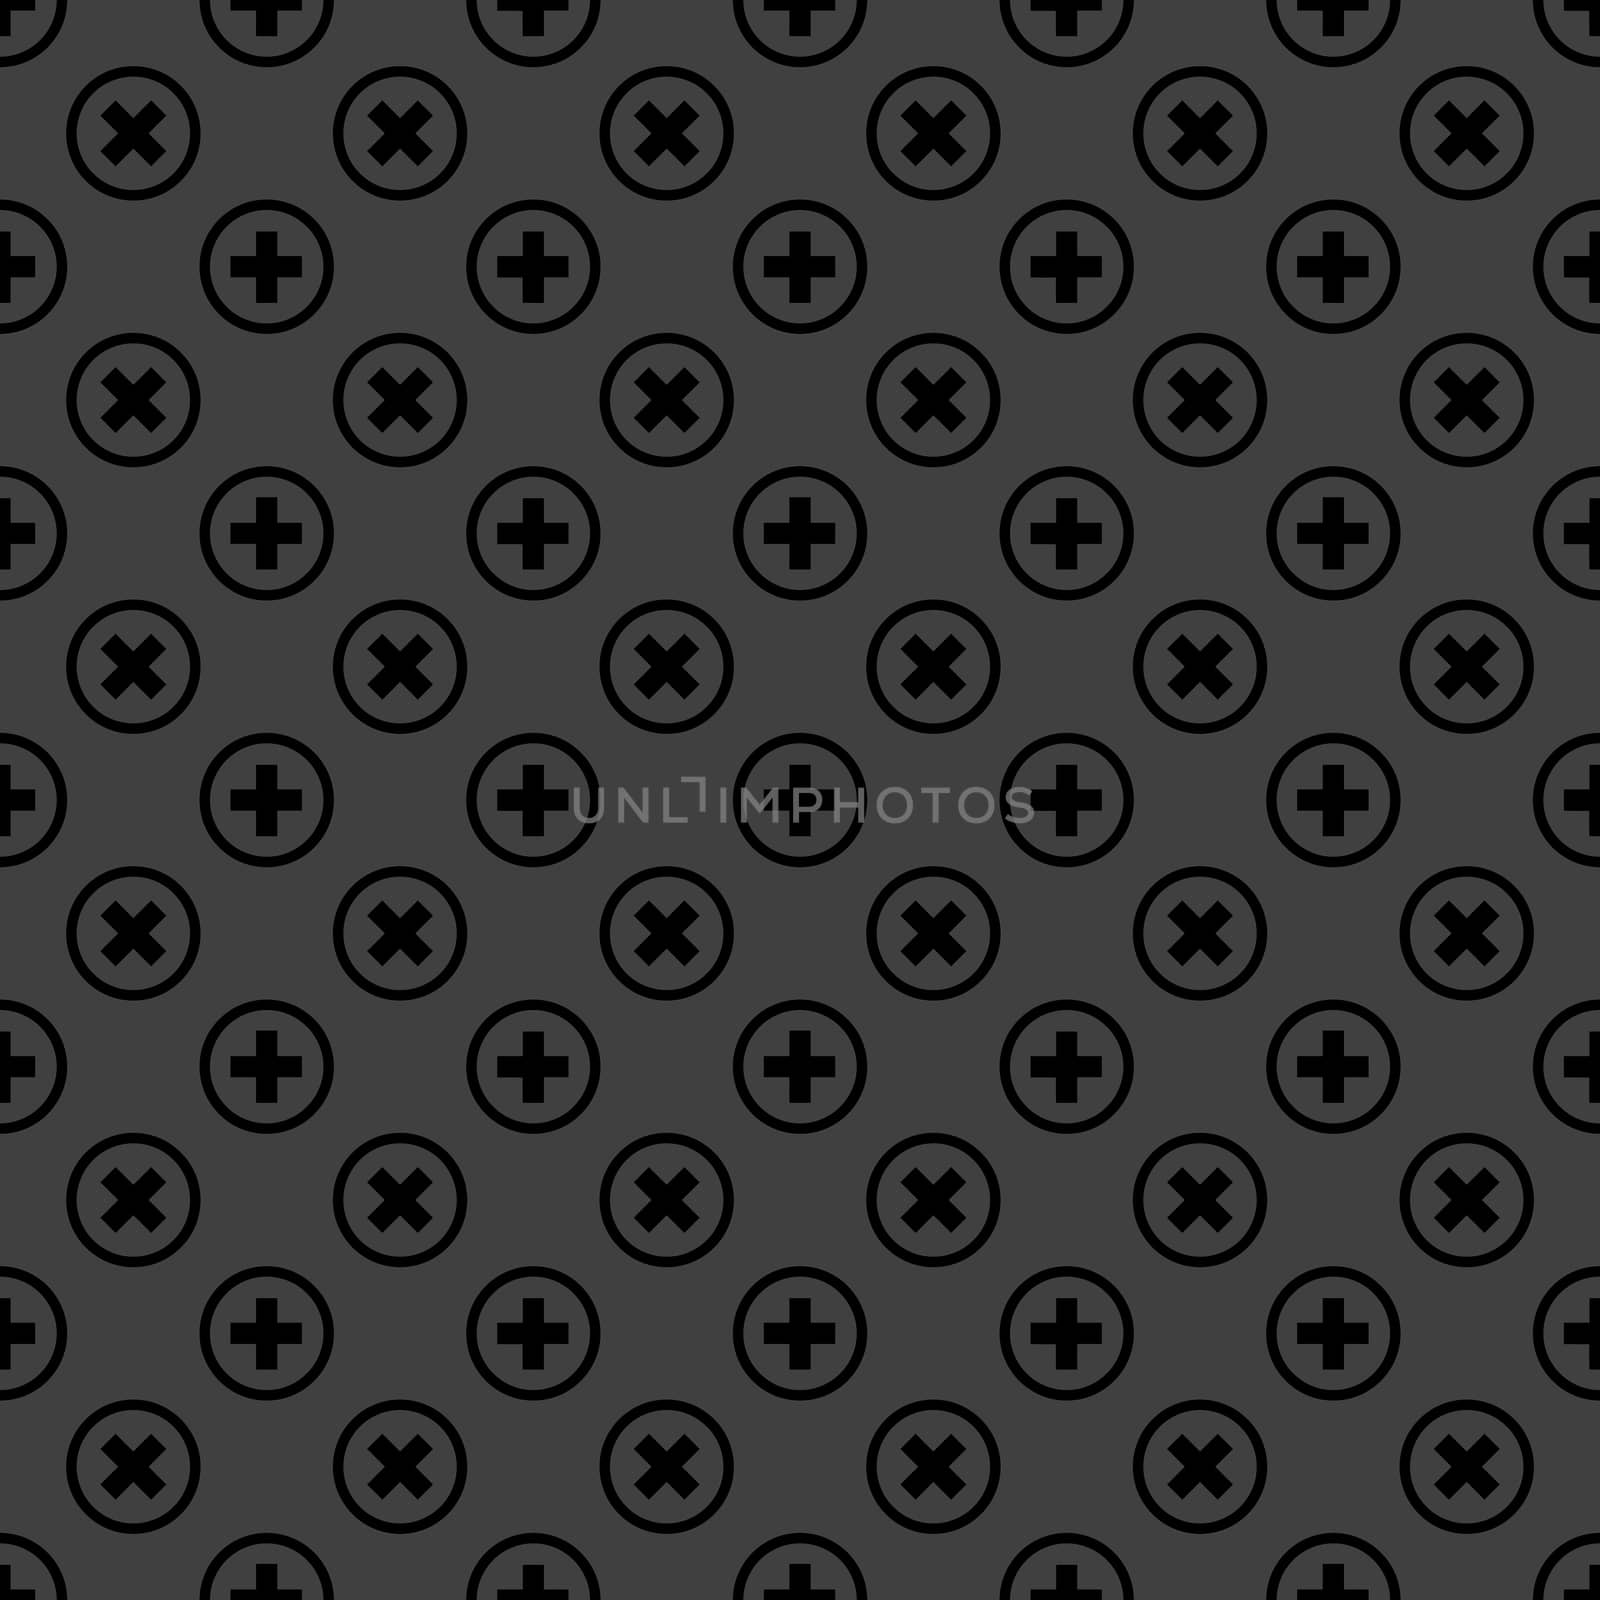 Plus web icon. flat design. Seamless pattern. by serhii_lohvyniuk